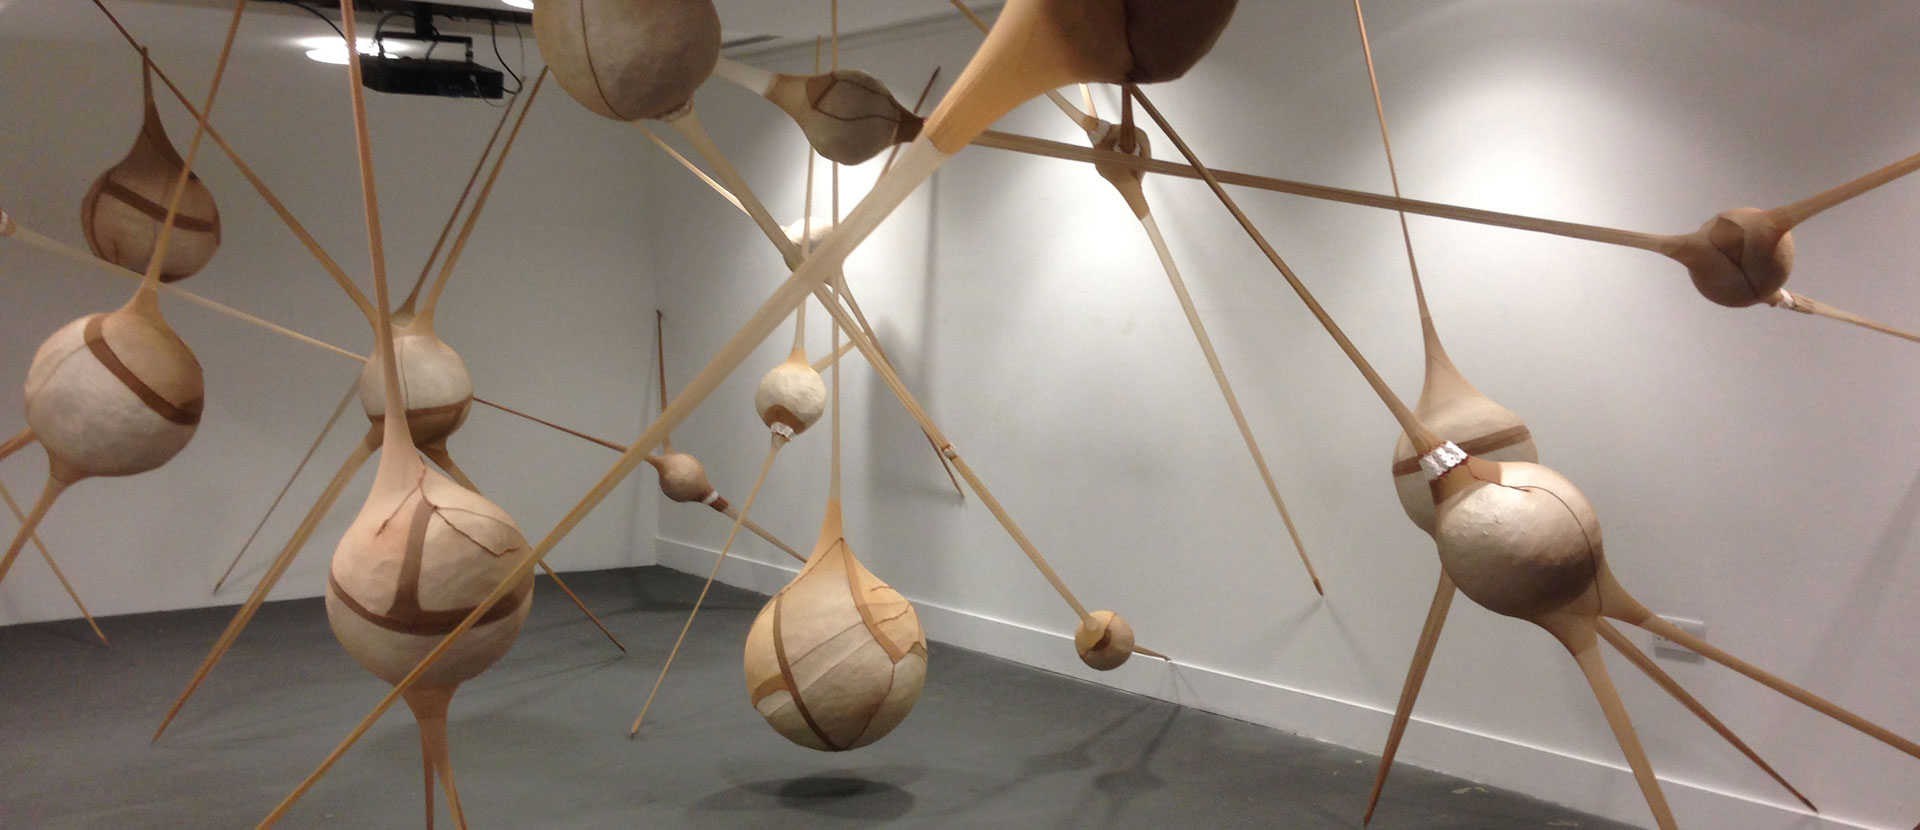 Mandy Greenland BA (Hons) Fine Art degree show installation